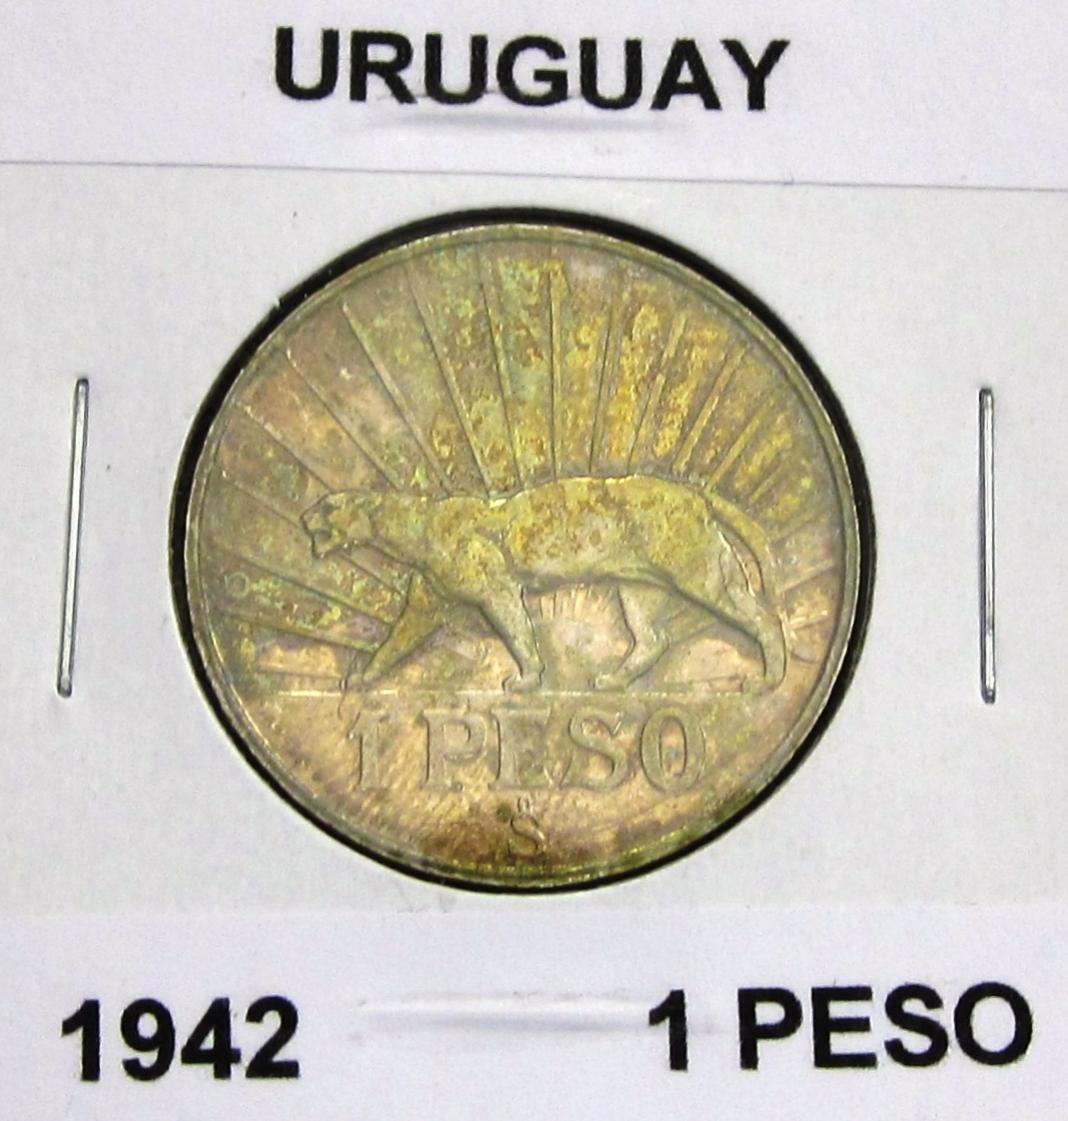 Uruguay animal coins | Coin Talk